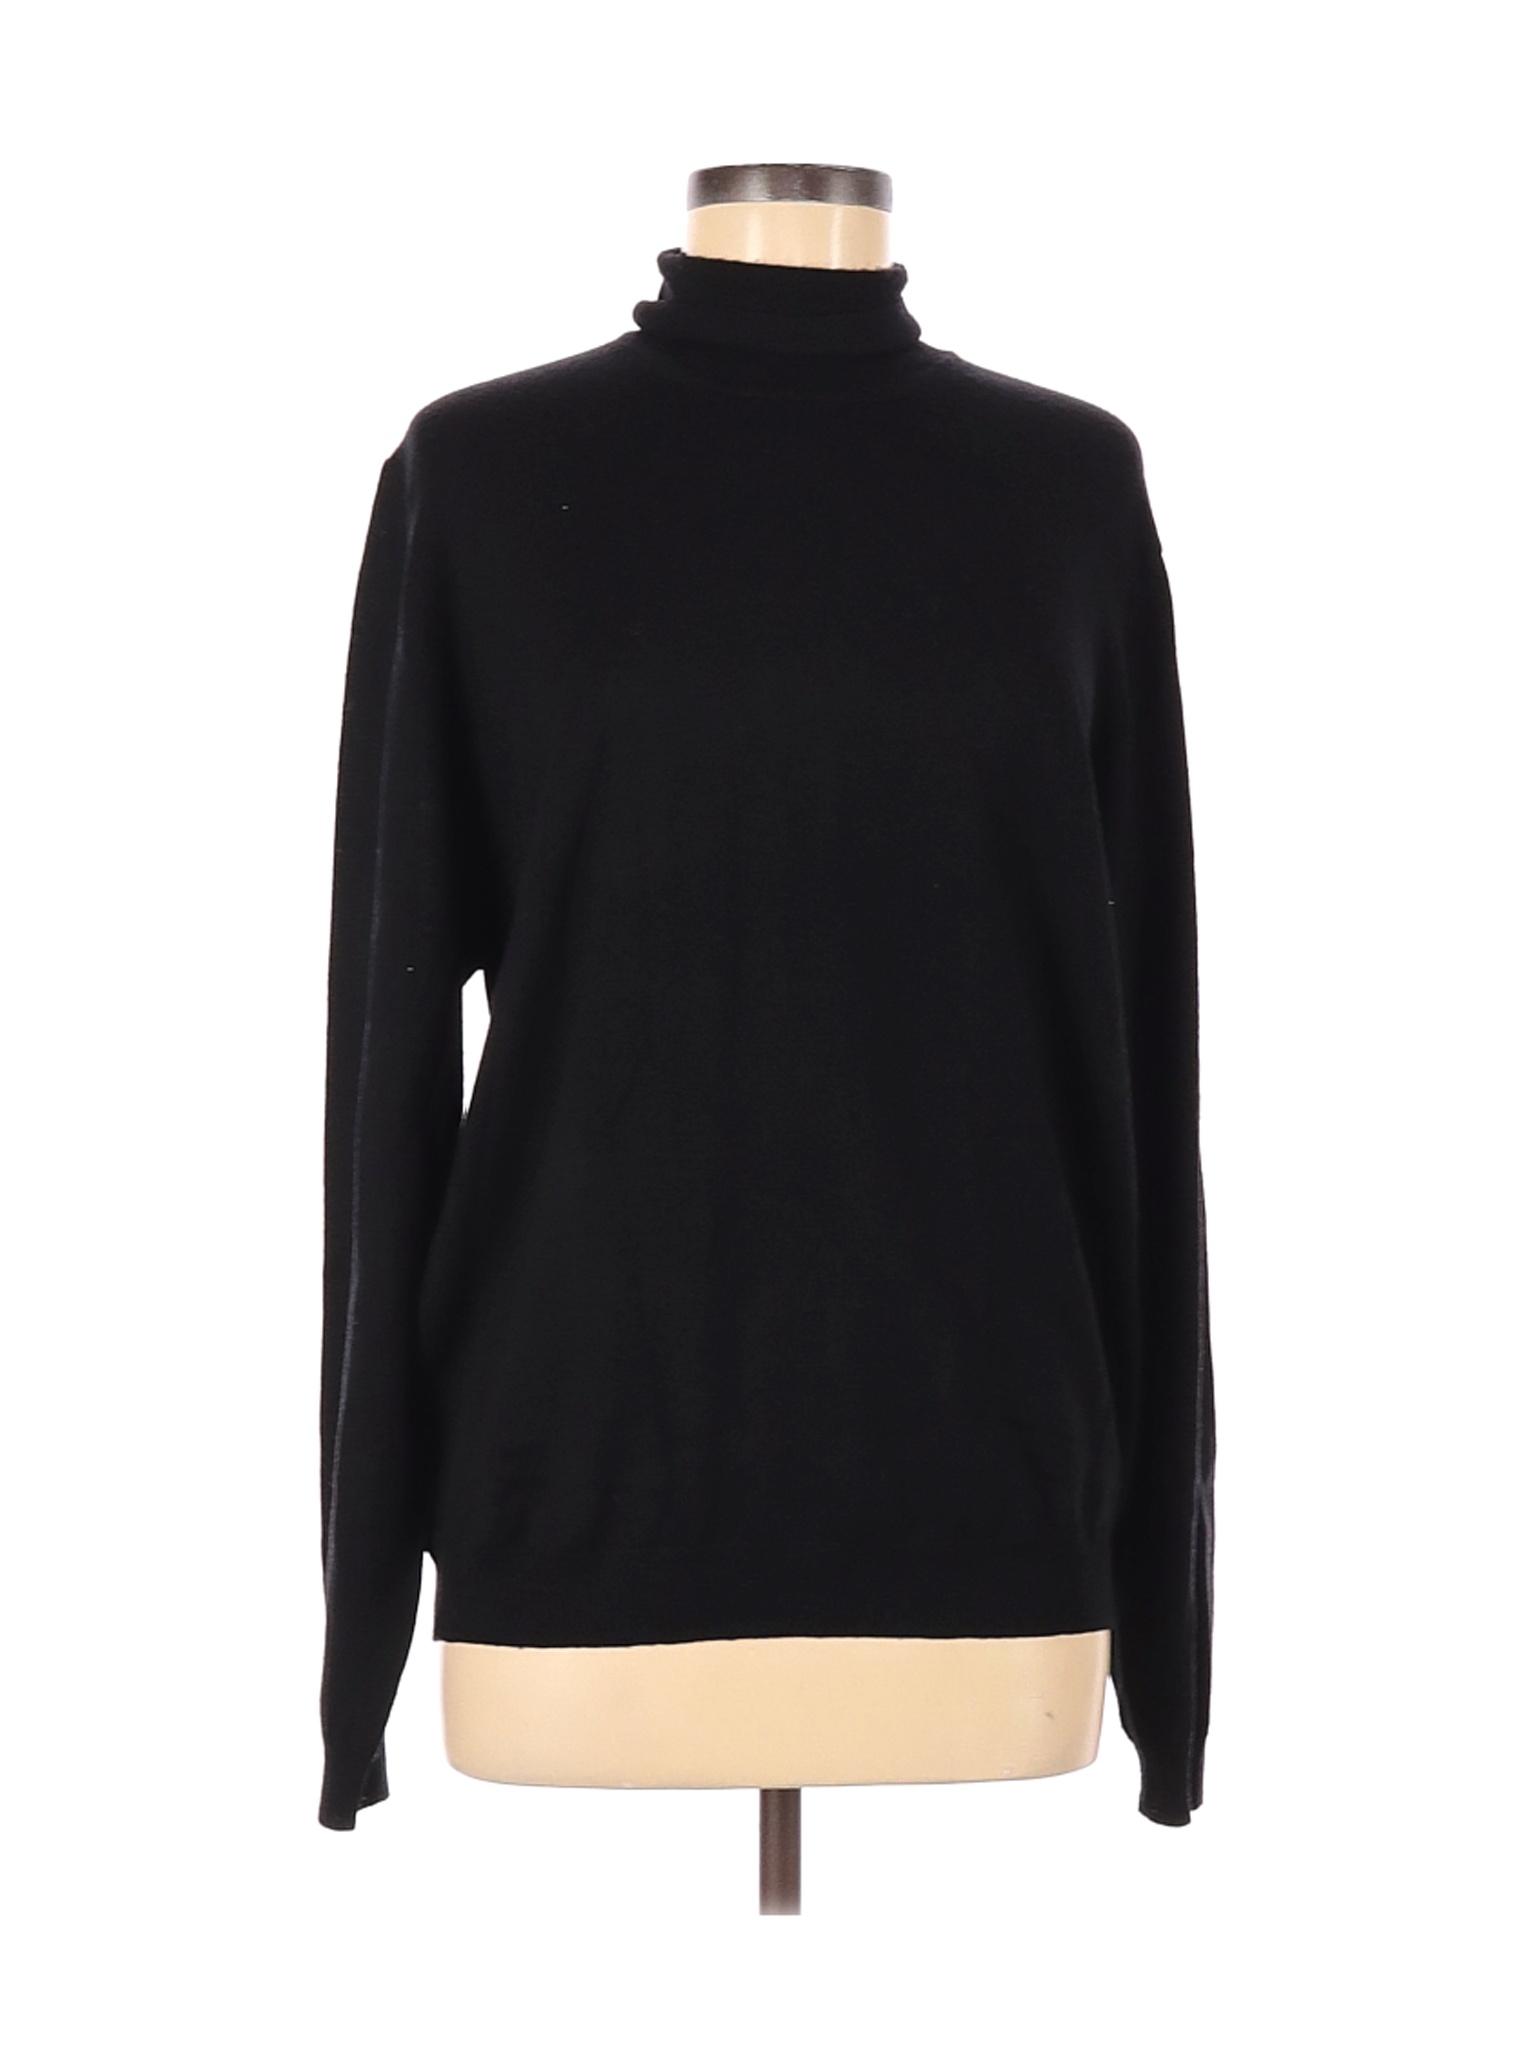 Brooks Brothers Women Black Turtleneck Sweater M | eBay